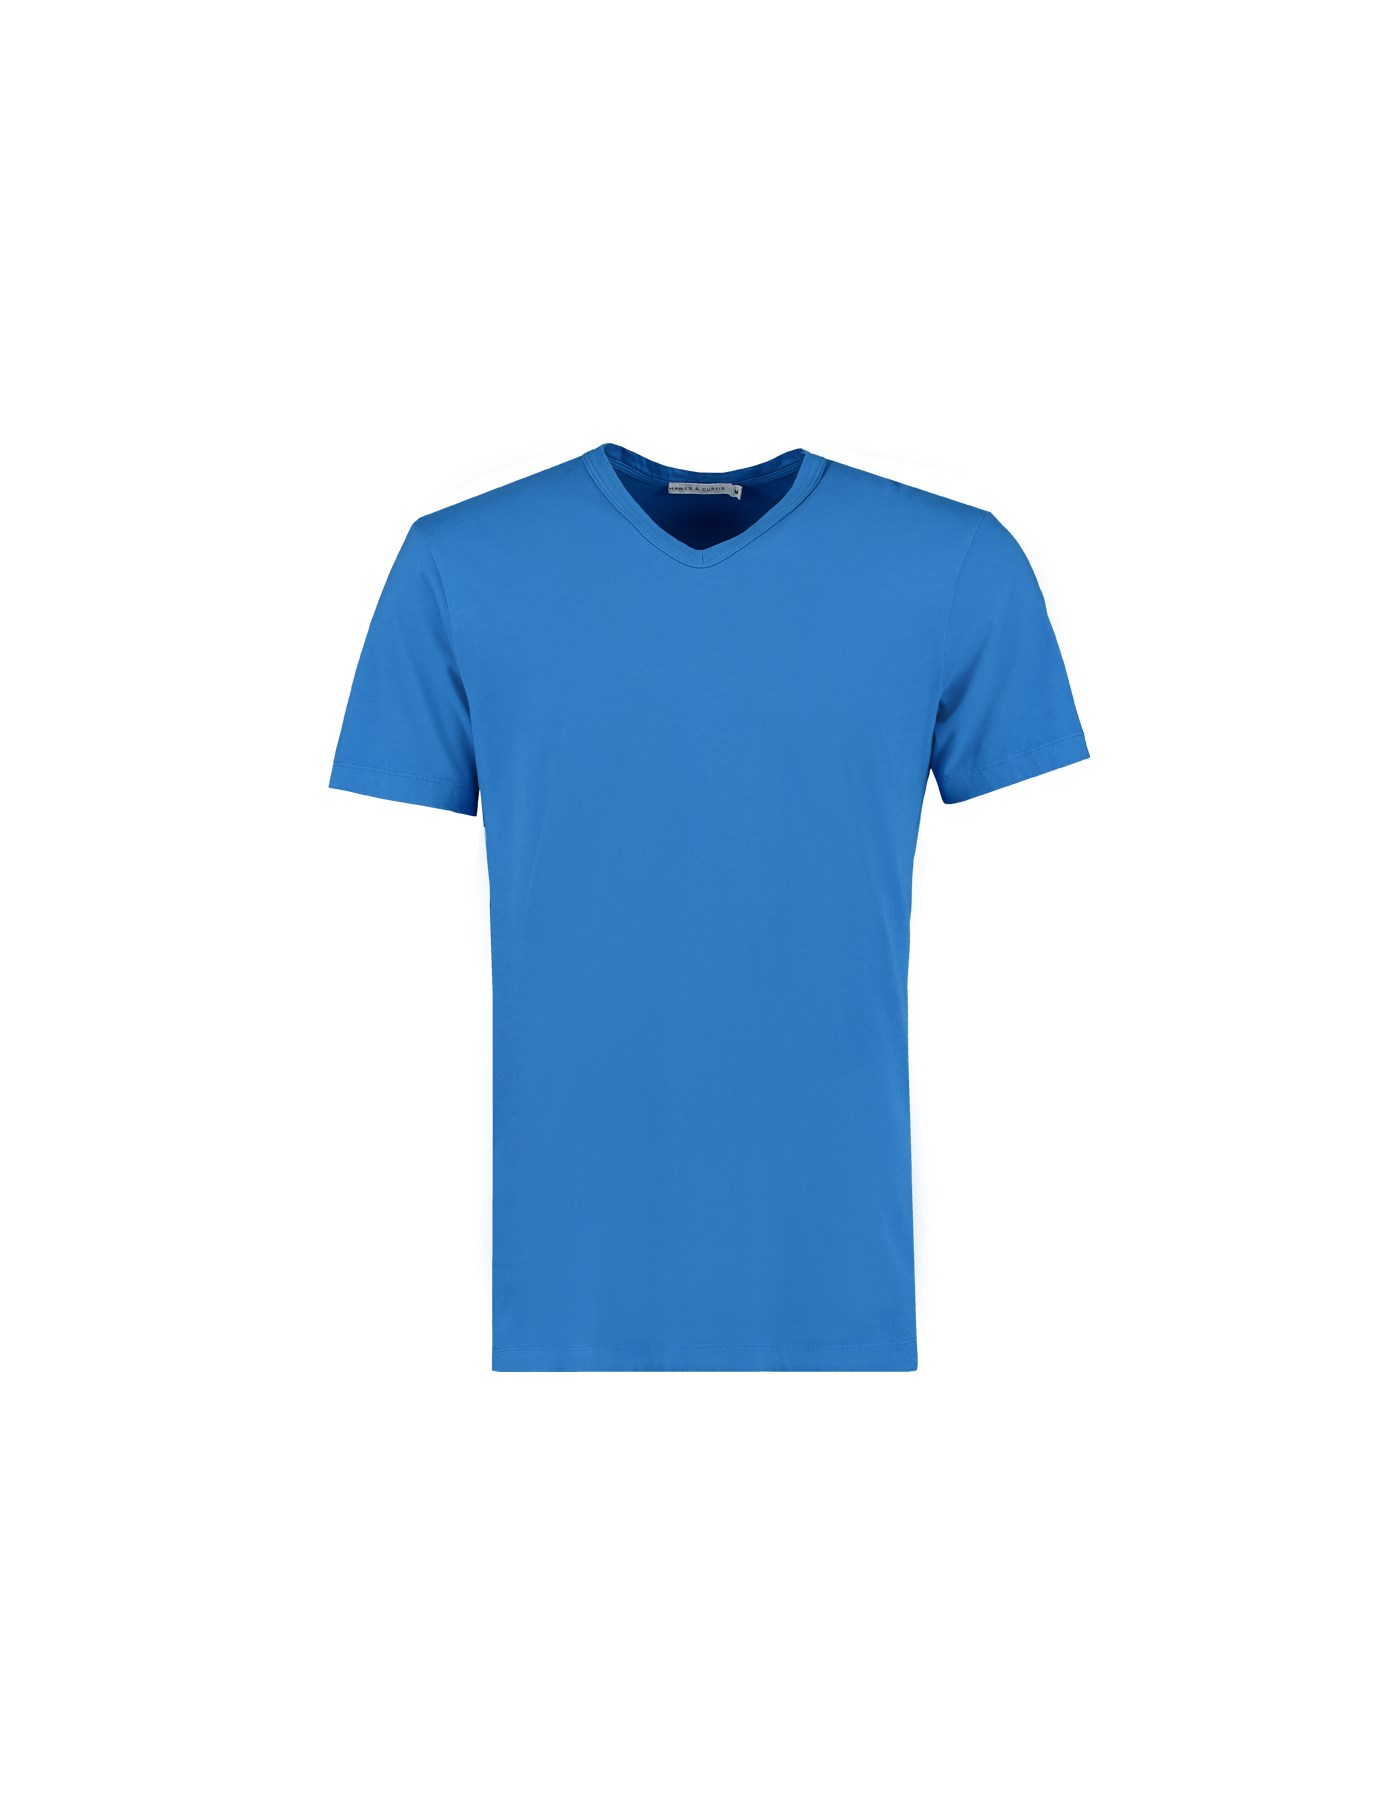 Men's Cobalt Blue Garment Dye V Neck T-Shirt - 100% Supima Cotton ...